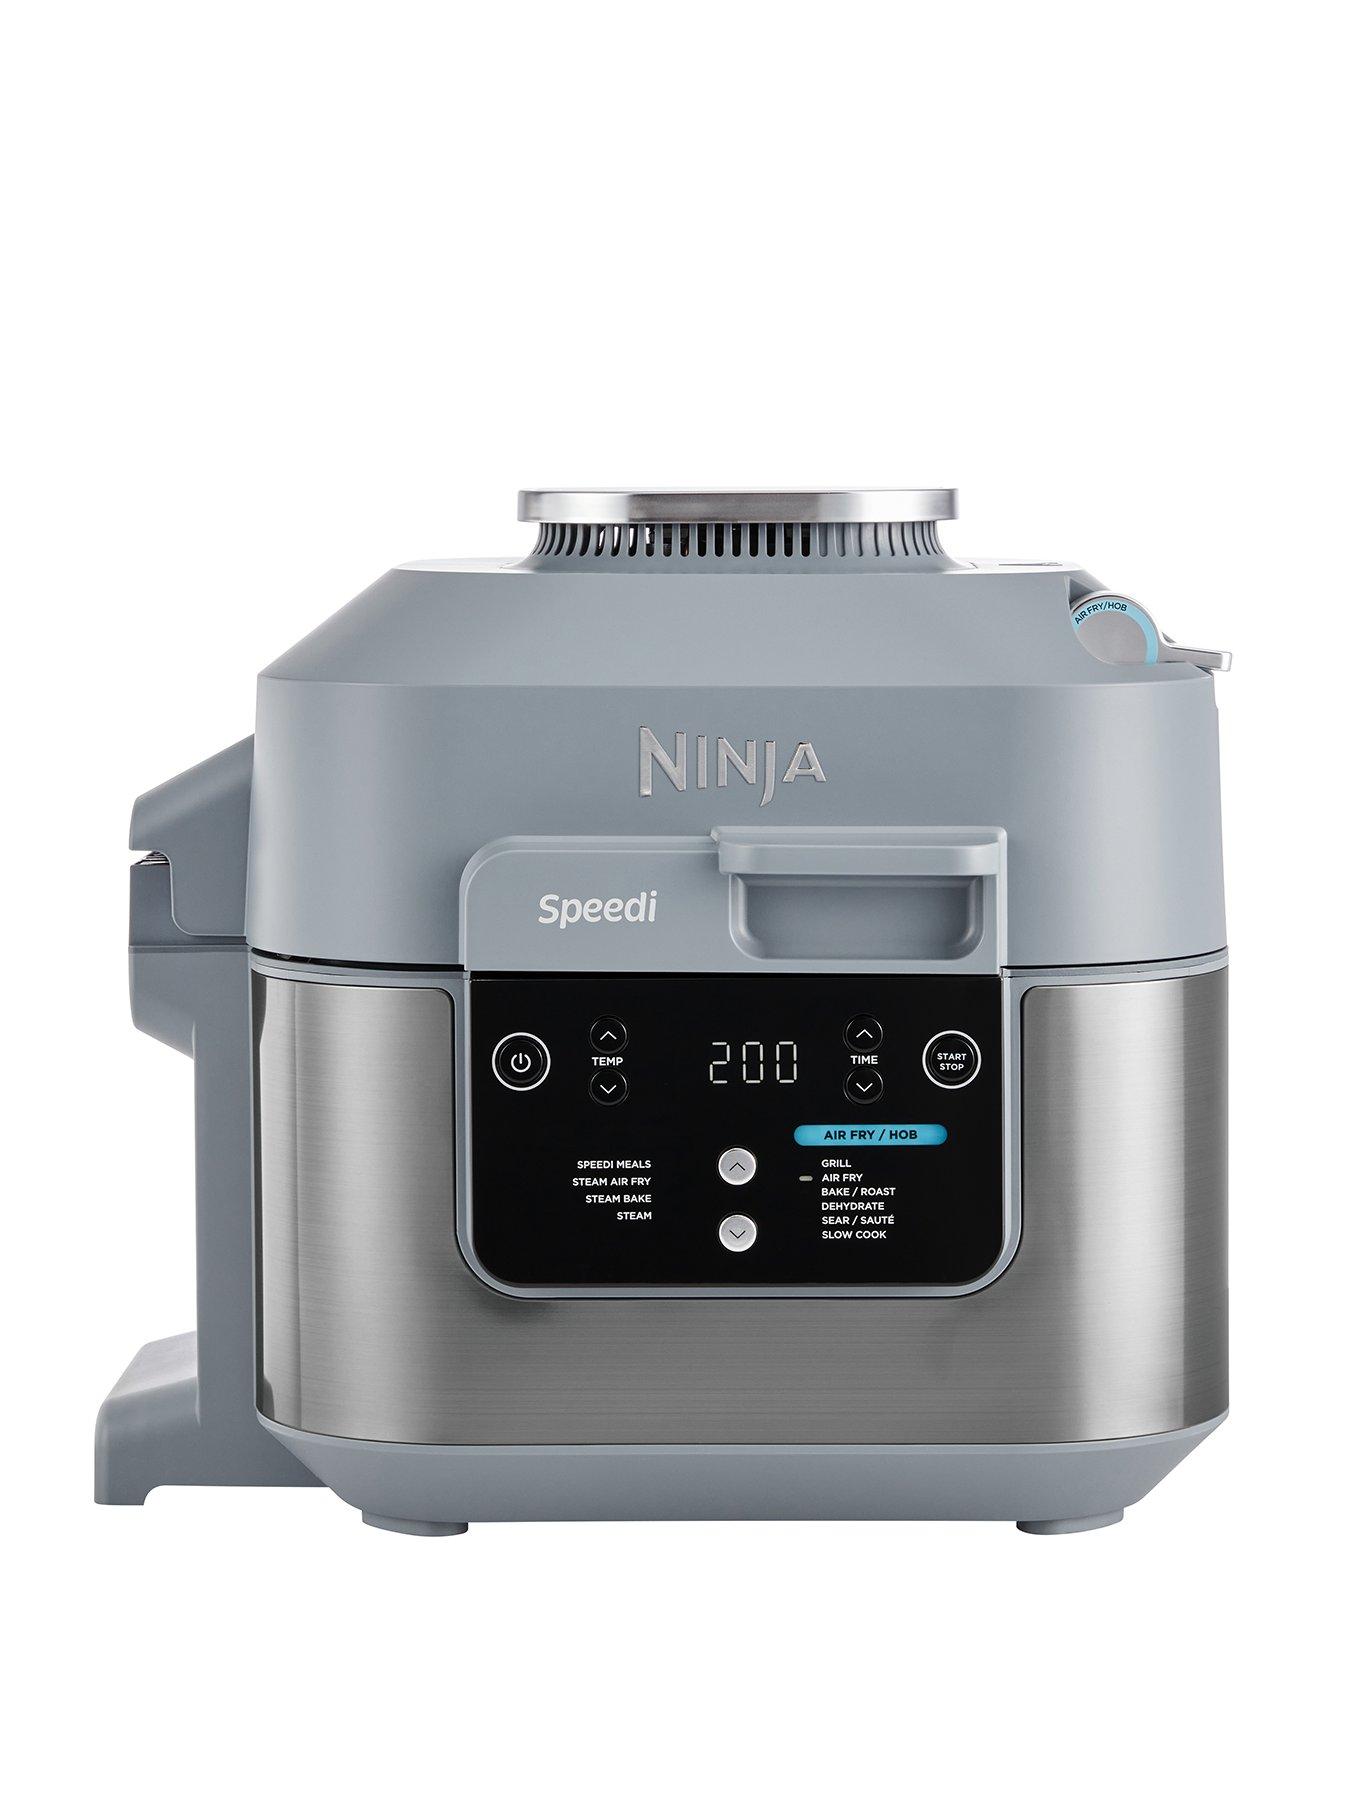 The Ninja Foodi 8-quart pressure cooker just dropped to 52% off